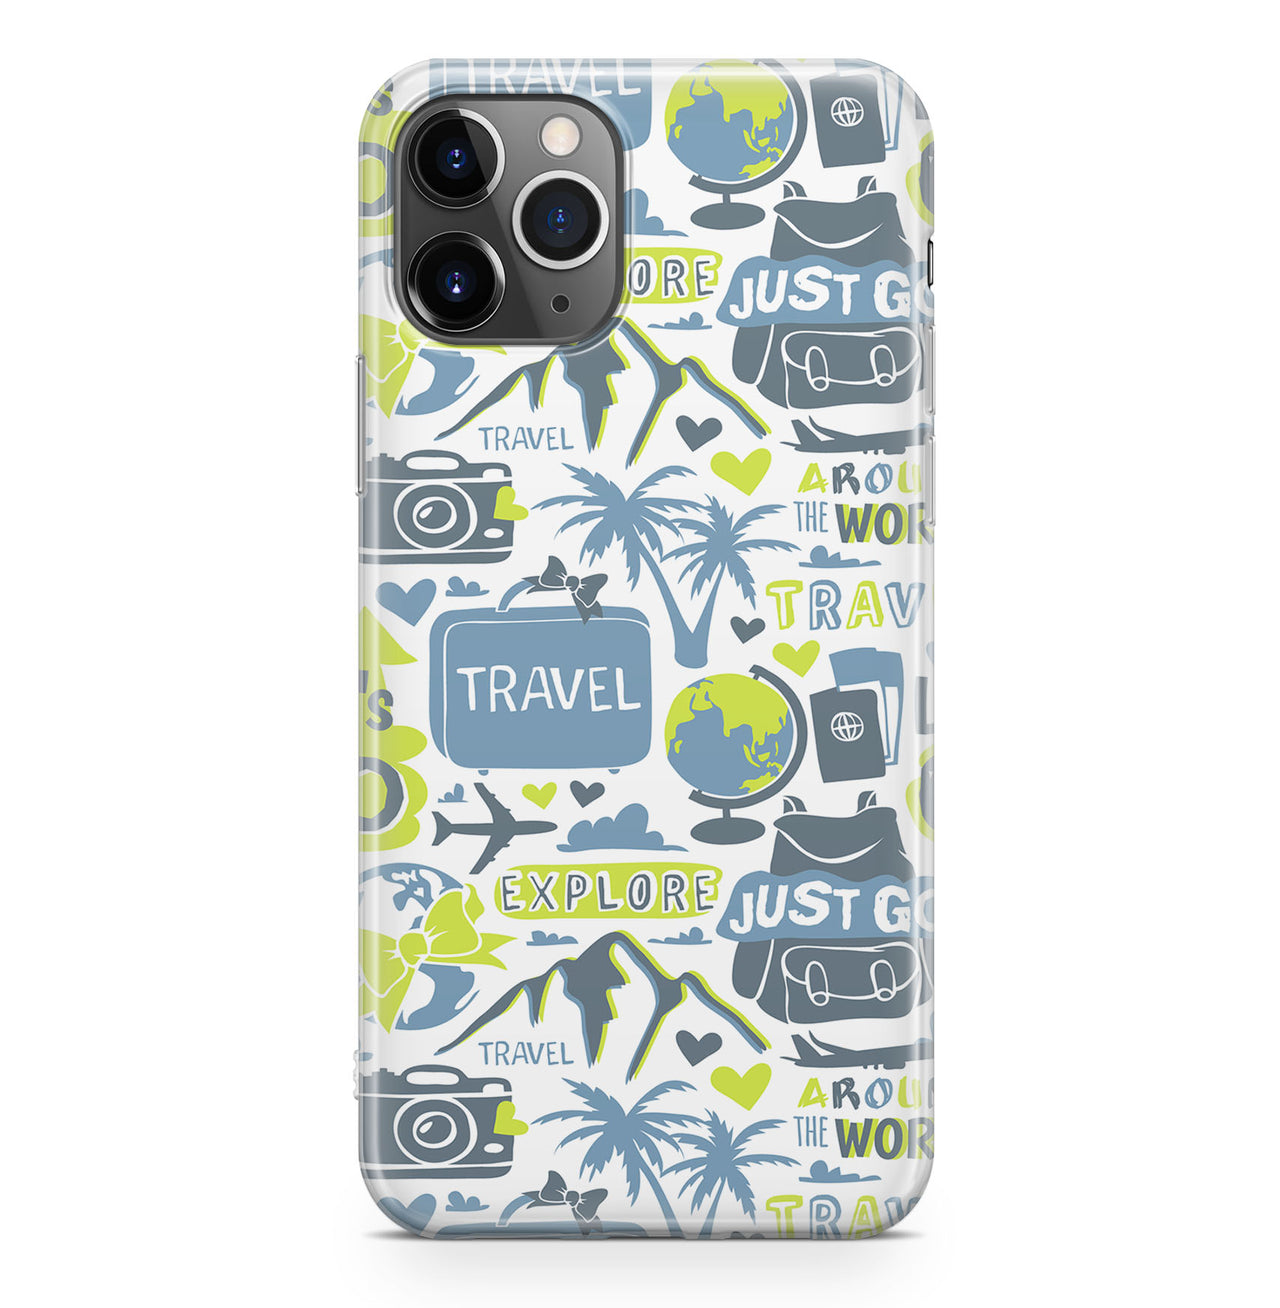 Motivational Travel Badges Designed iPhone Cases